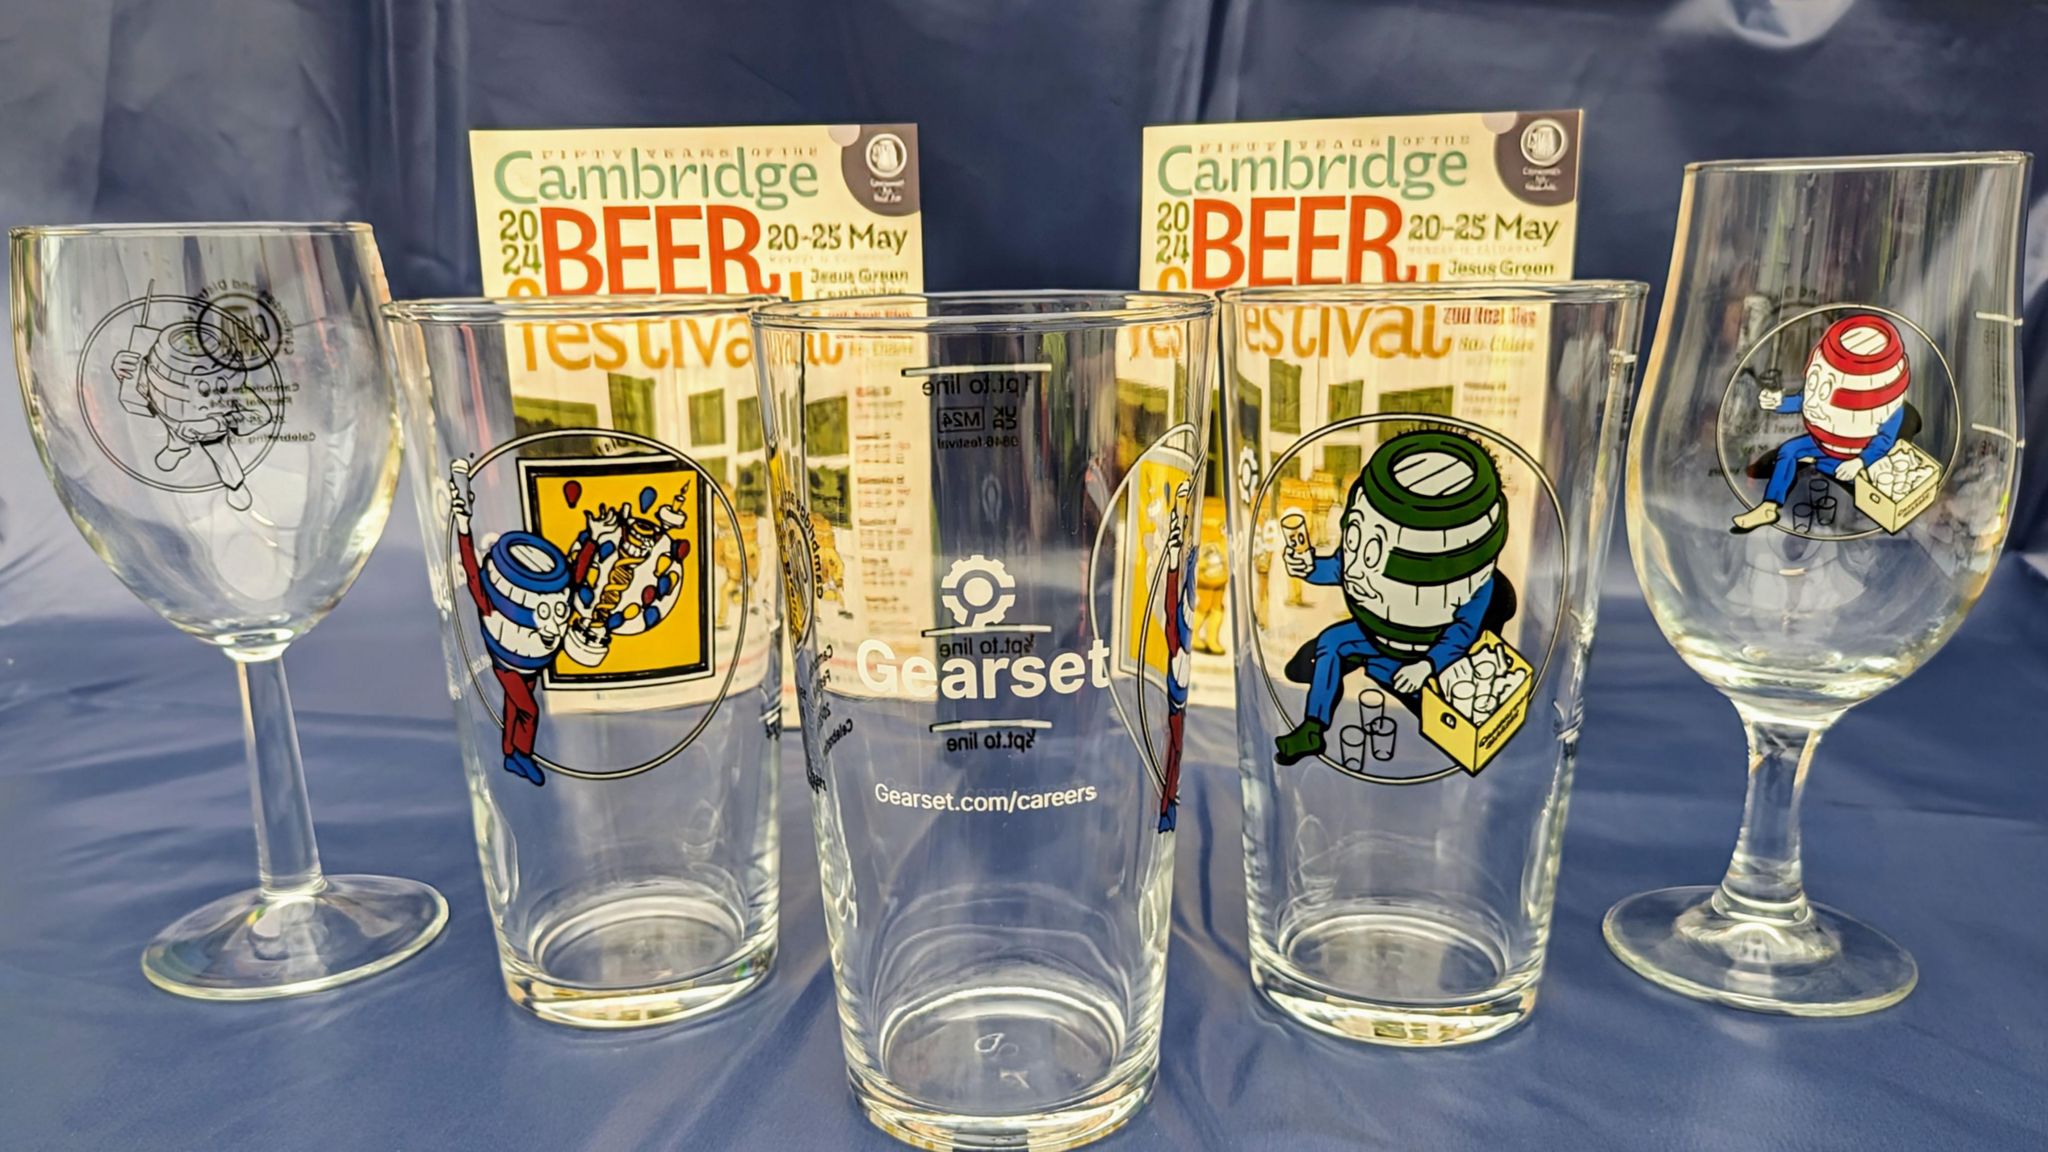 Beer festival glass designs